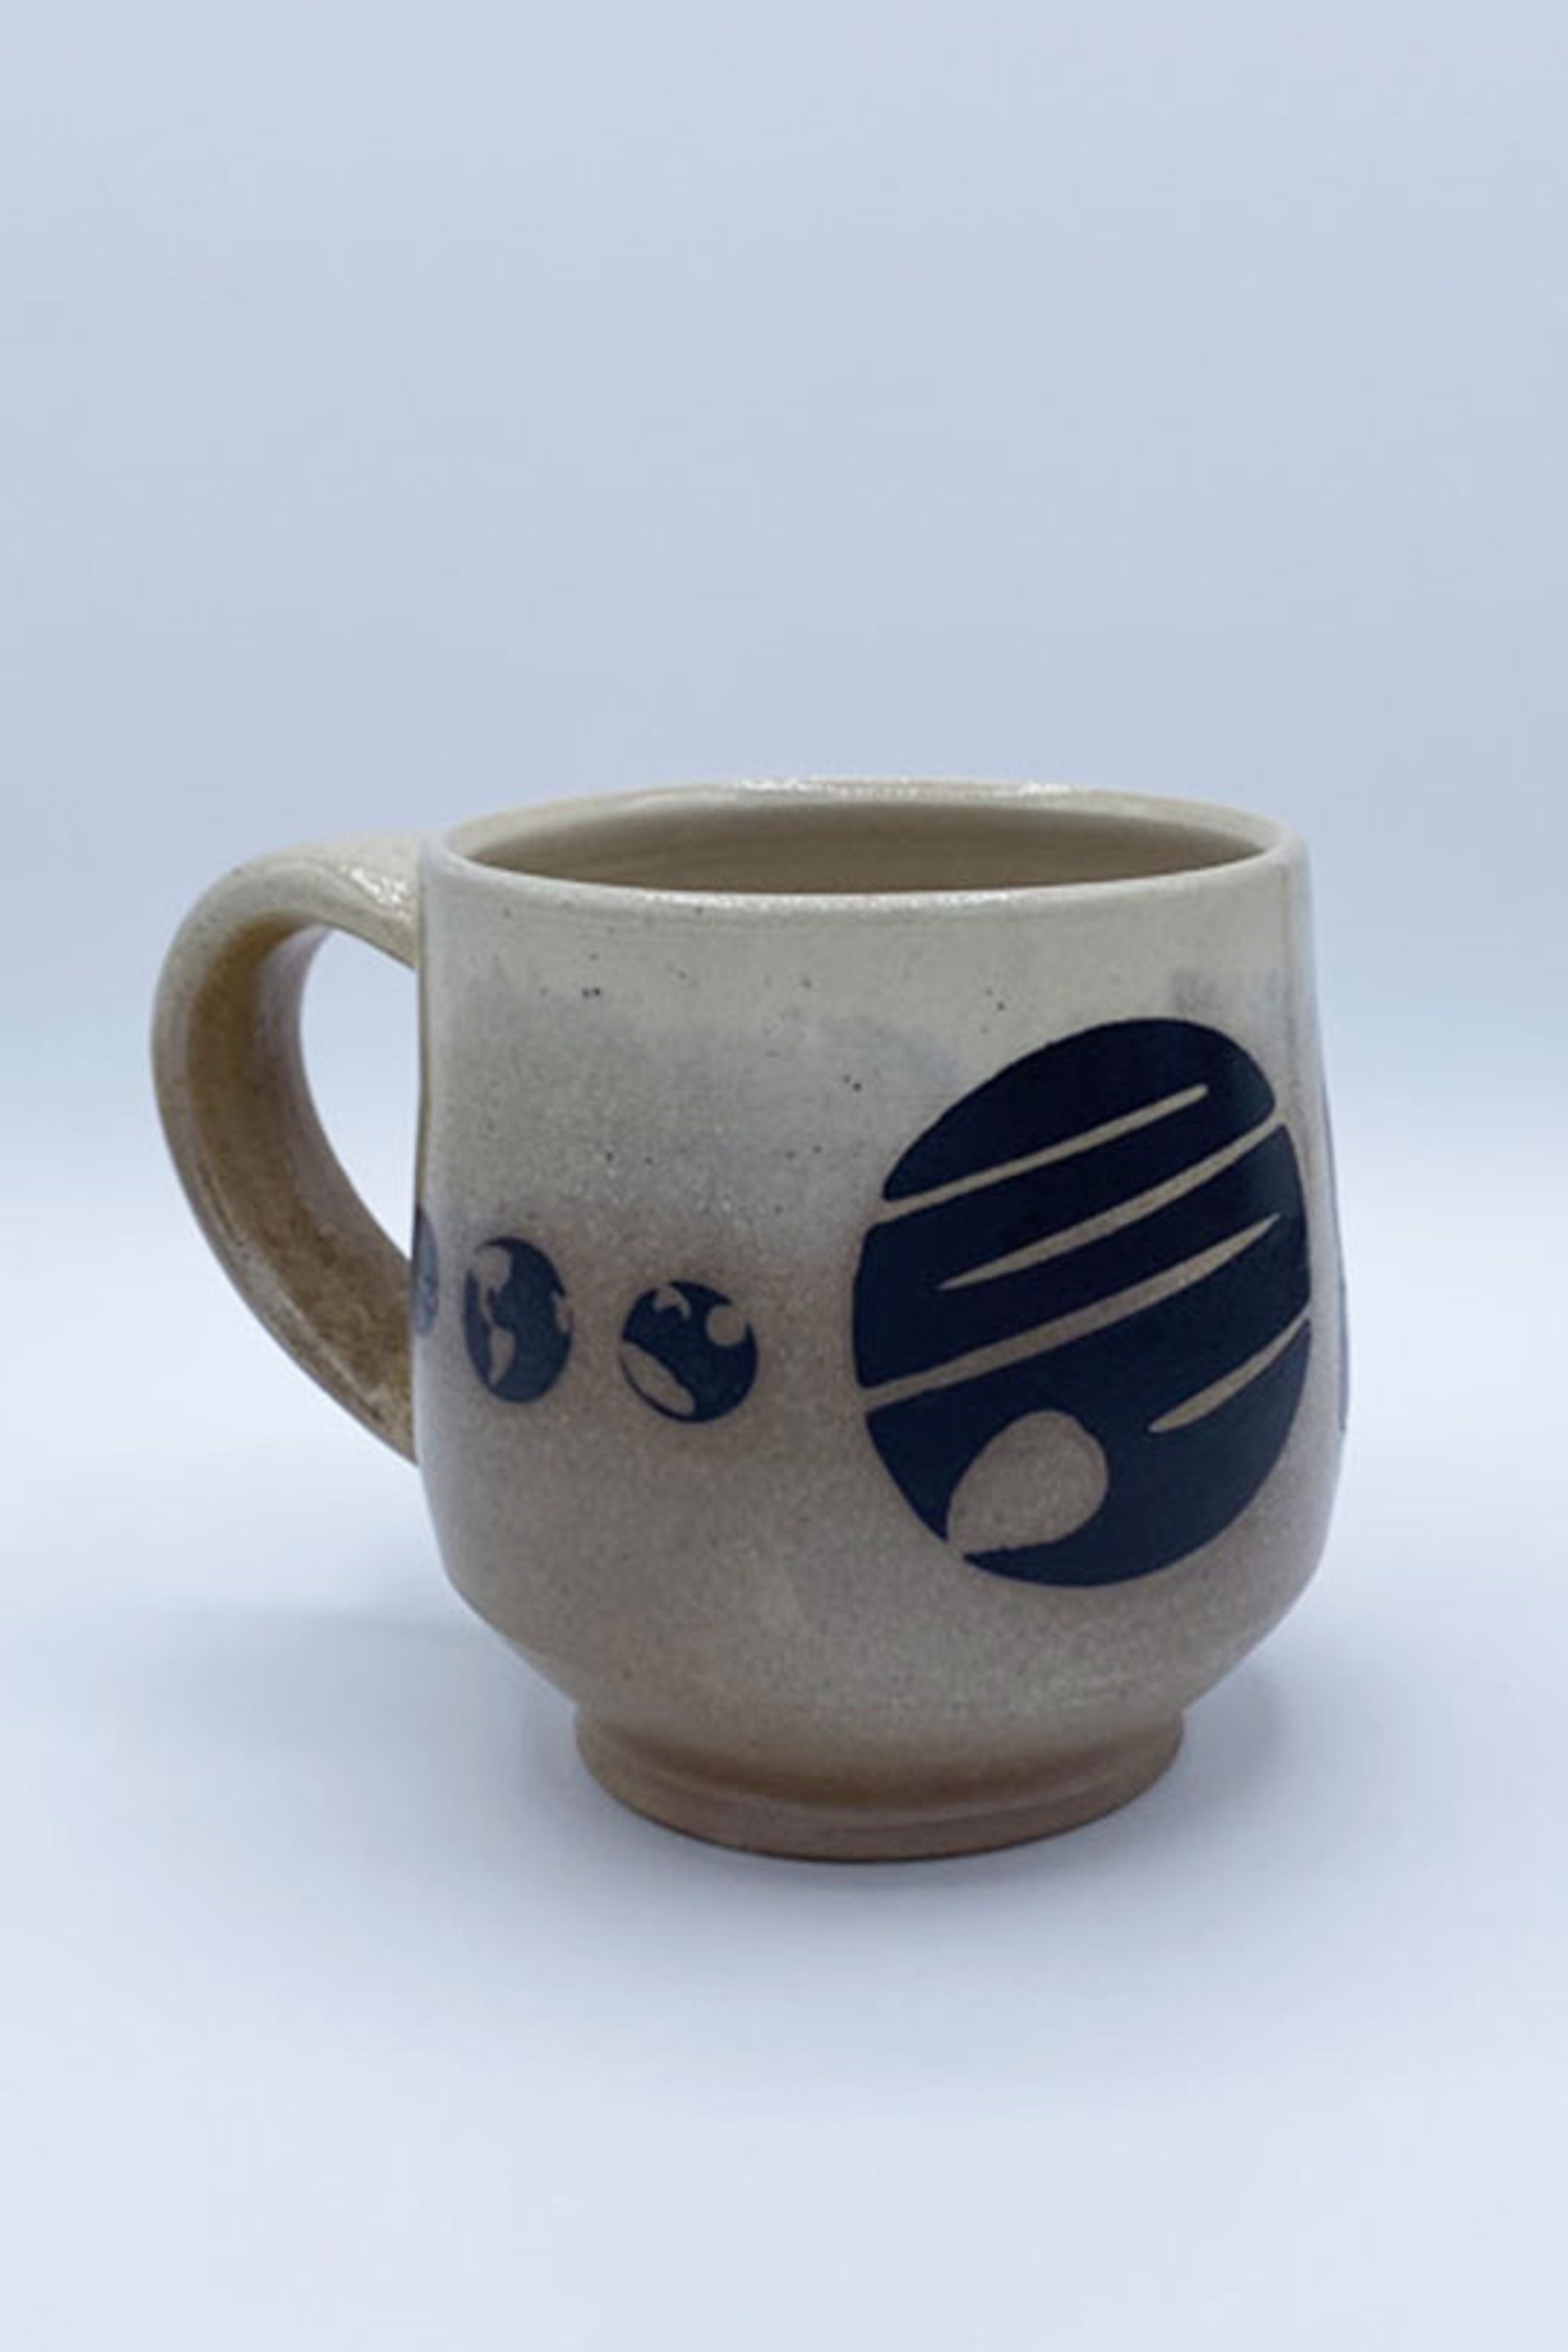 Planet Mug by Laura Cooke